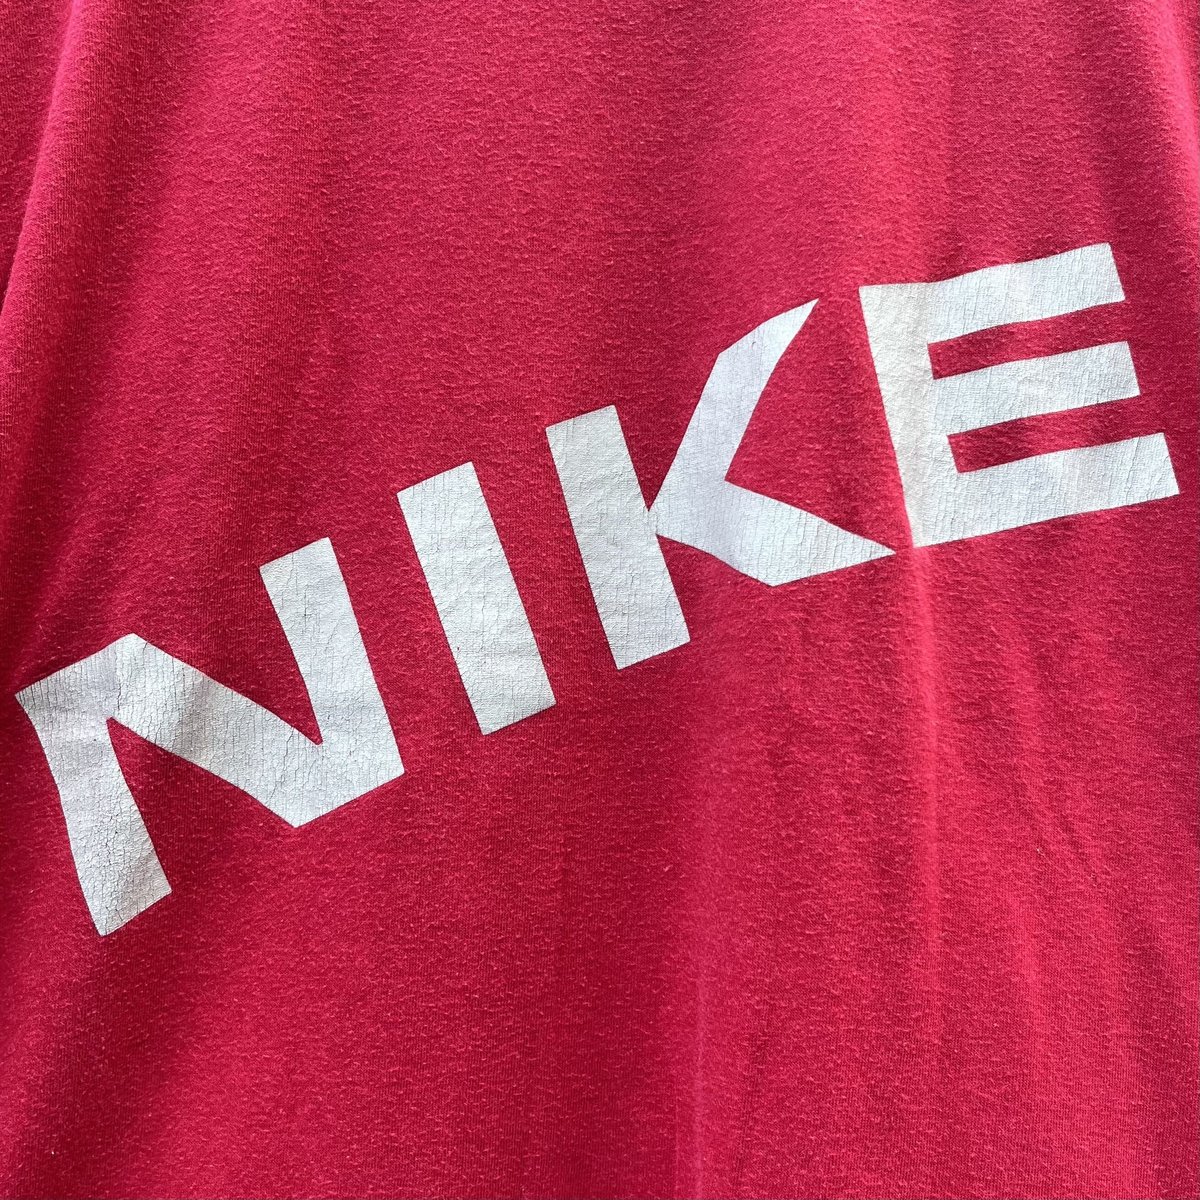 NIKE/ナイキ ロゴTシャツ 80年代 紺タグ Made in USA (USED)